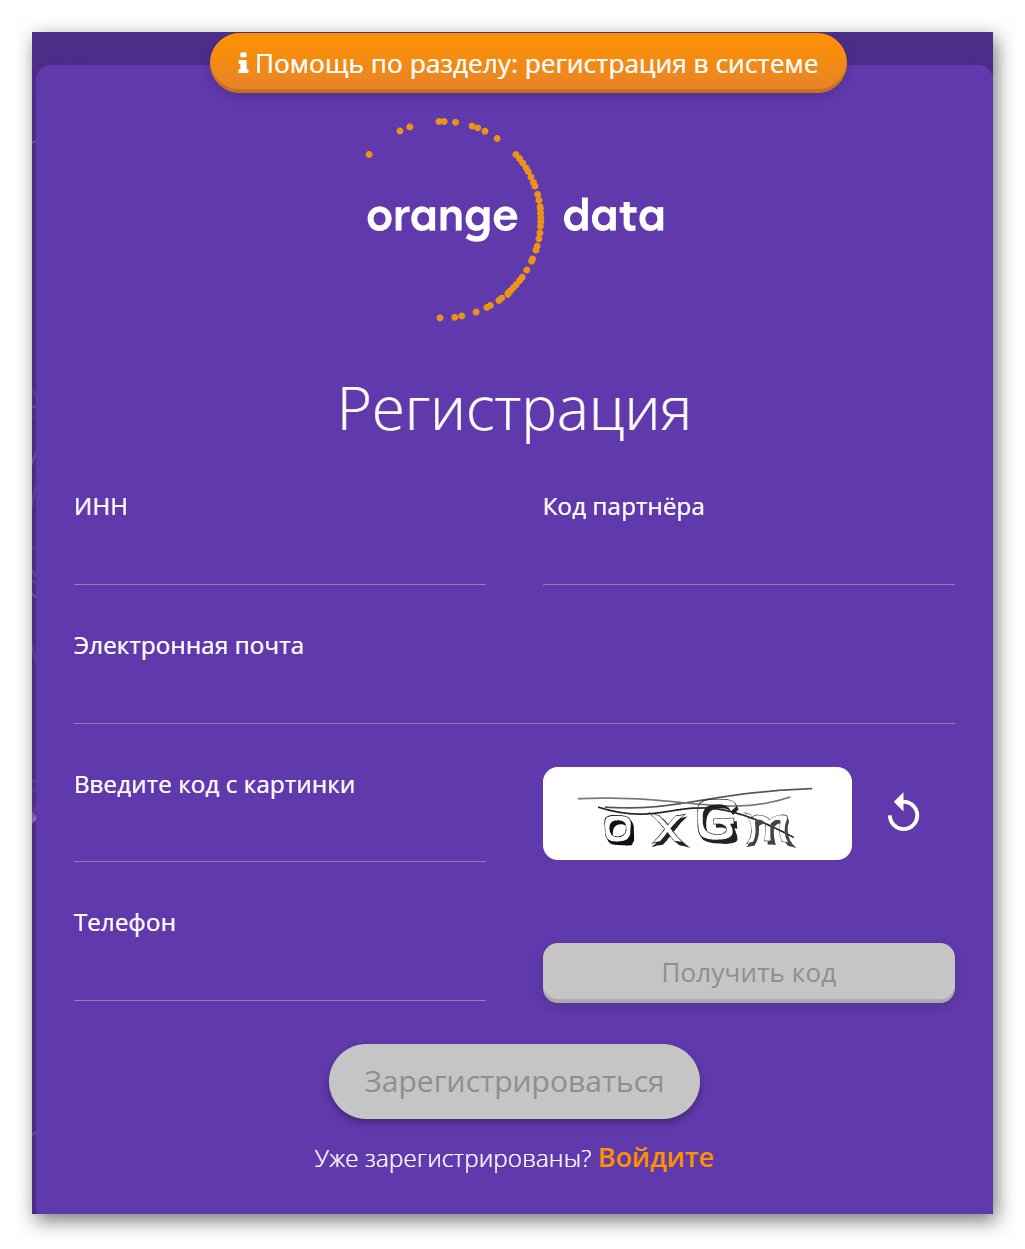 orangedata_03.png